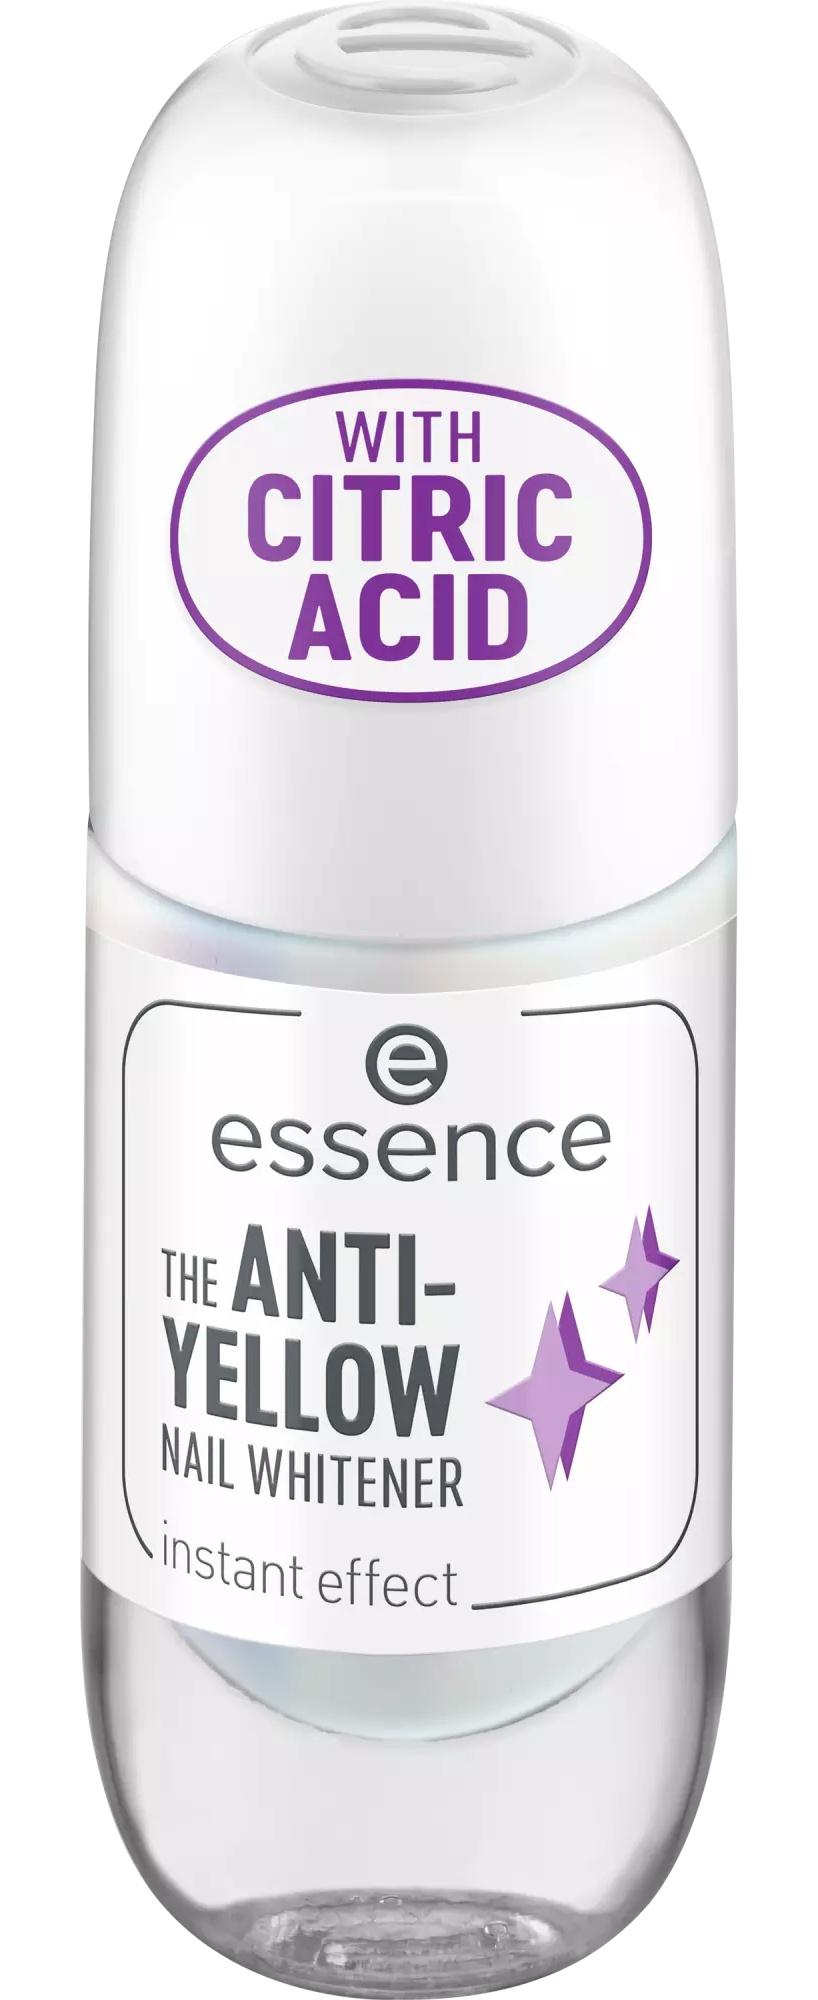 Essence The Anti-Yellow Nail Whitener